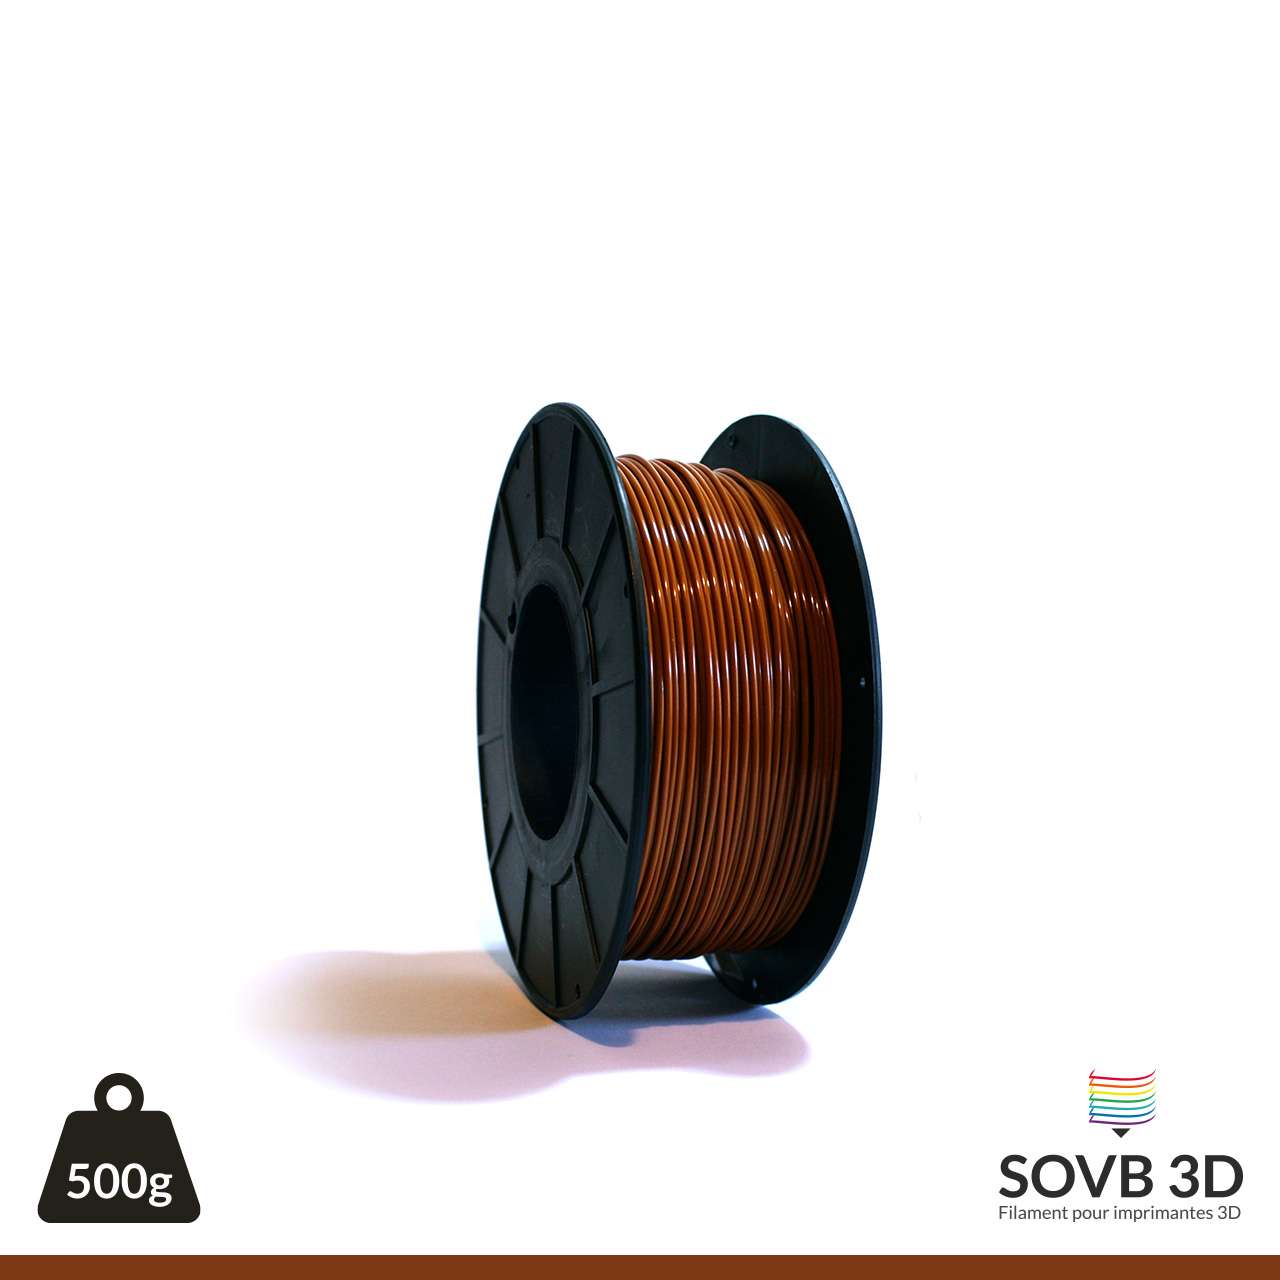 Filament 3D PLA Marron foncé 1.75mm 500g - SOVB 3D